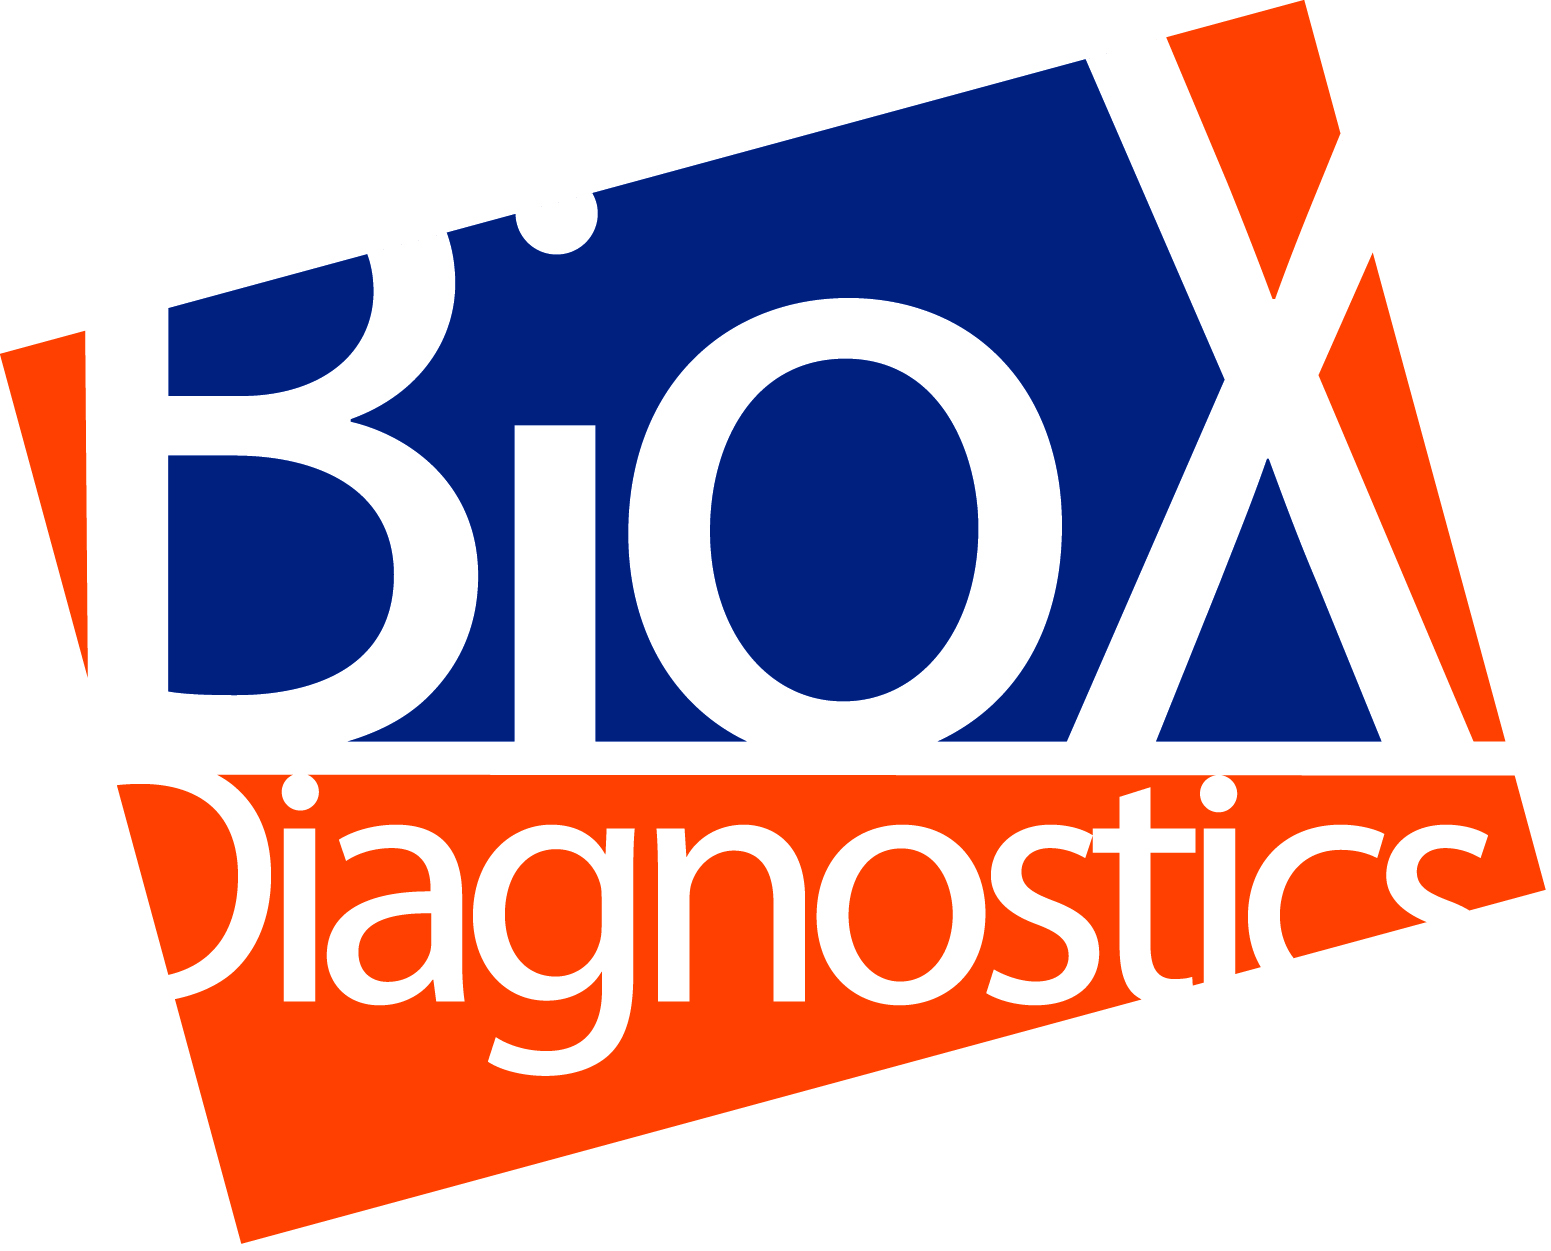 Bio-X Diagnostics - Silver sponsor